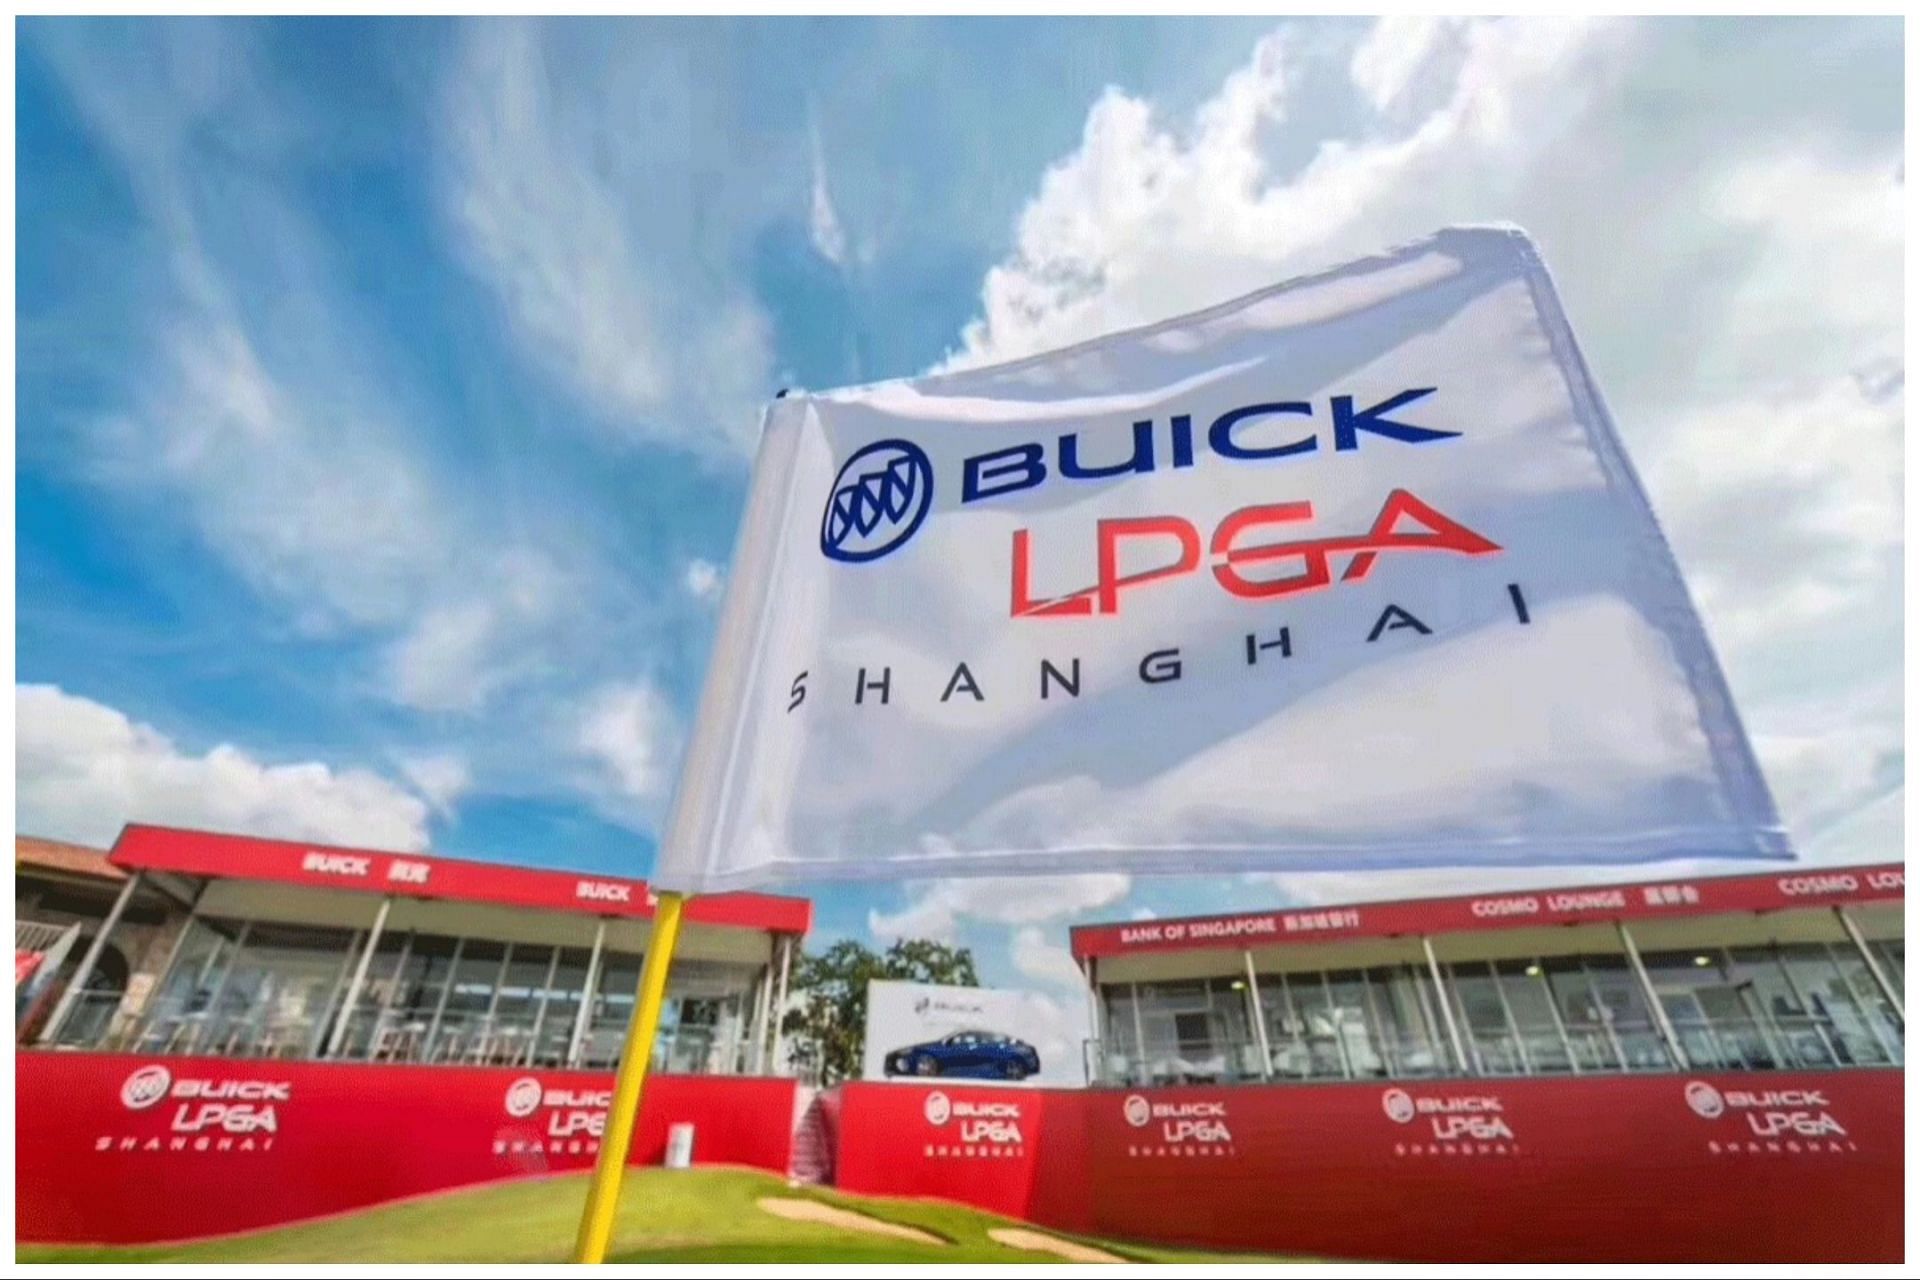 Buick LPGA Shanghai is returning to the LPGA Tour calendar after four years